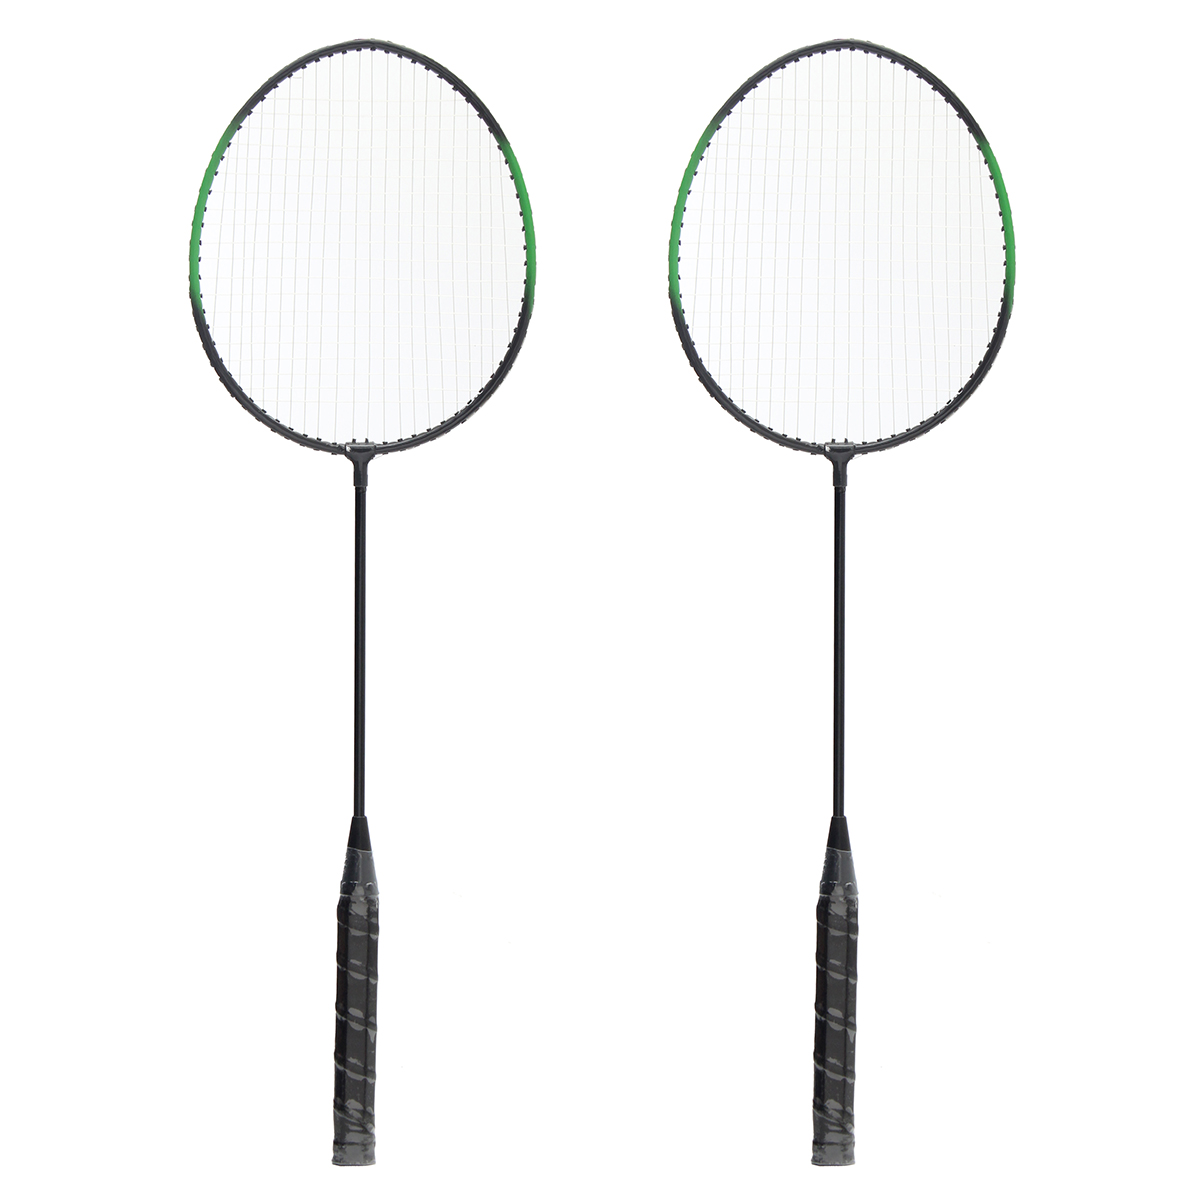 4-Player-Aluminum-Alloy-Racket-Professional-Badminton-Set-with-Net-Carry-Bag-1198901-6